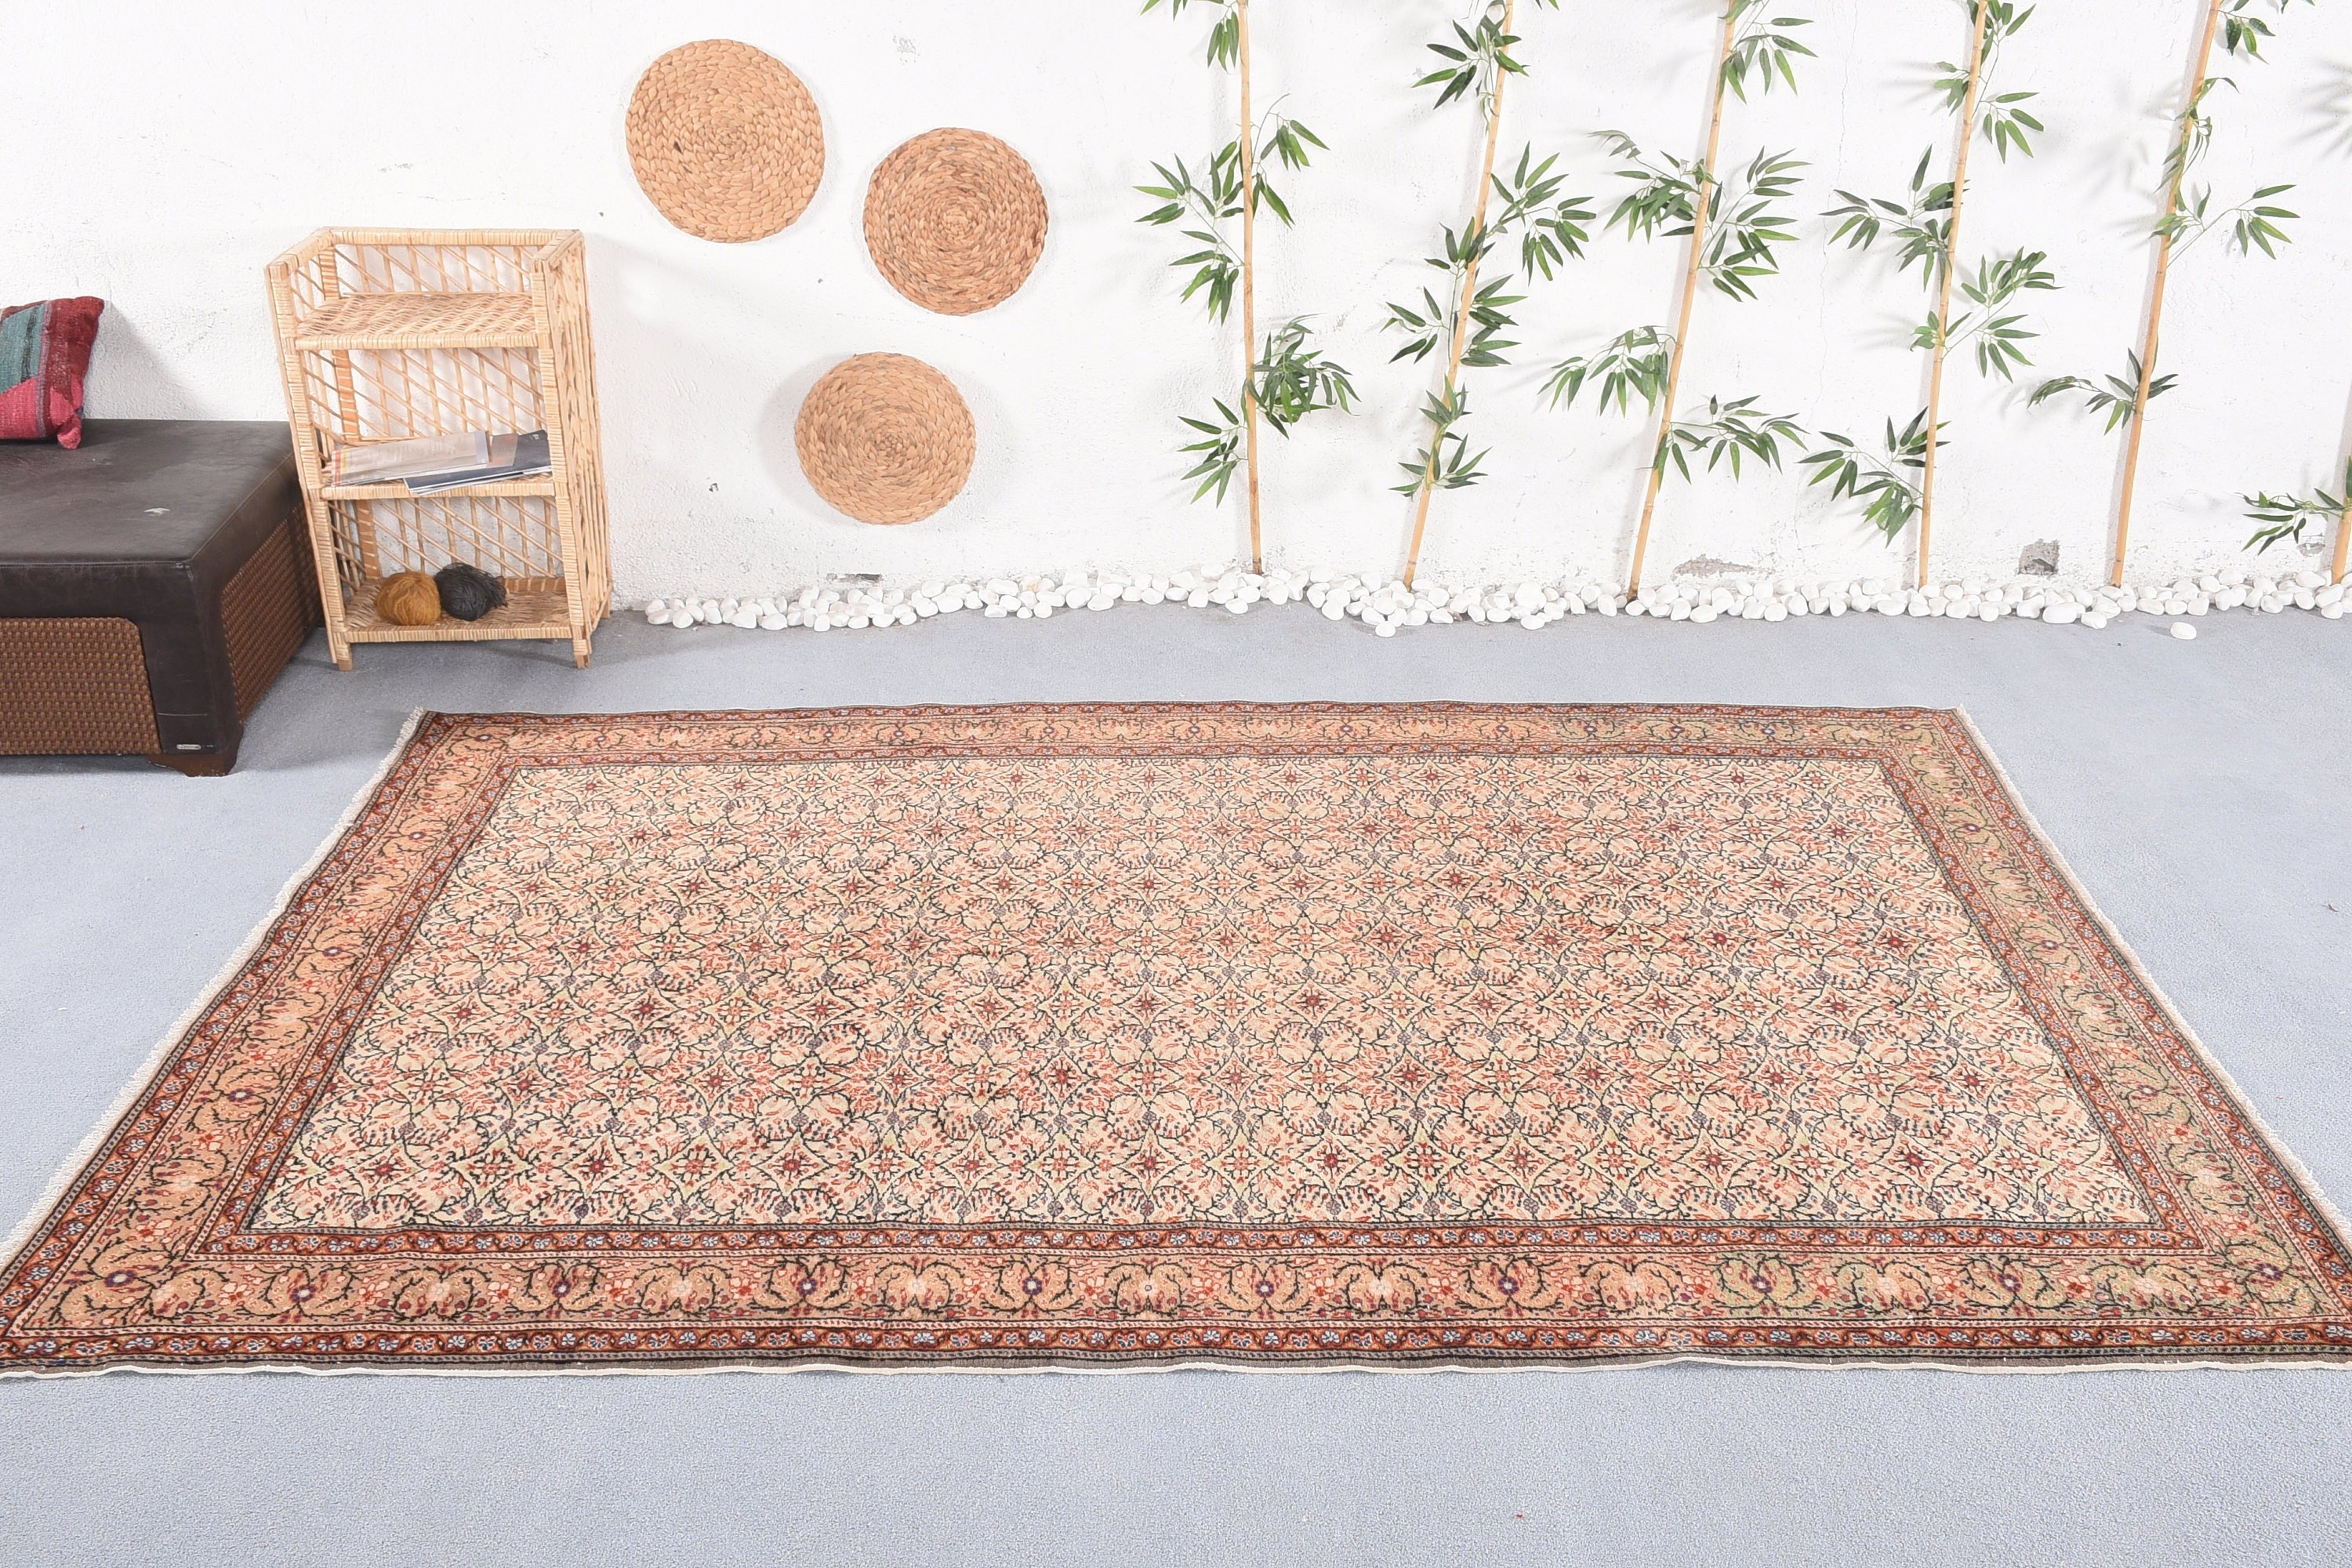 Salon Rug, Turkish Rug, Moroccan Rug, Vintage Rug, Orange Home Decor Rugs, Eclectic Rug, Bedroom Rug, 6.4x9.4 ft Large Rugs